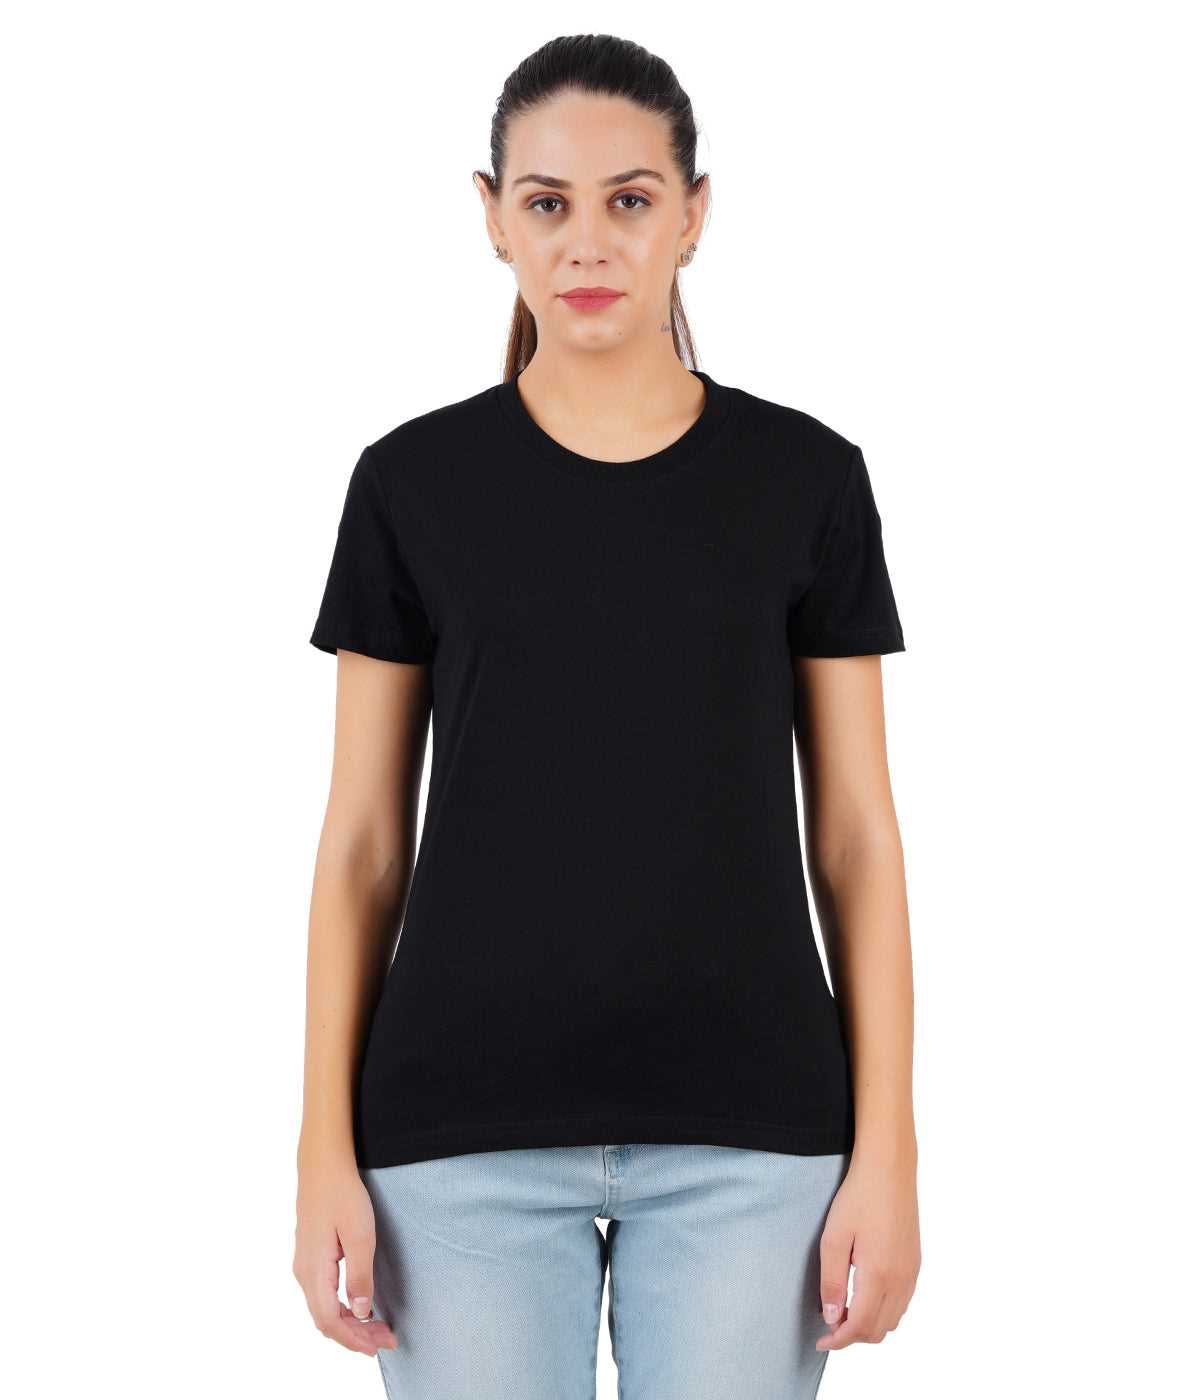 Black round neck t-shirts for women